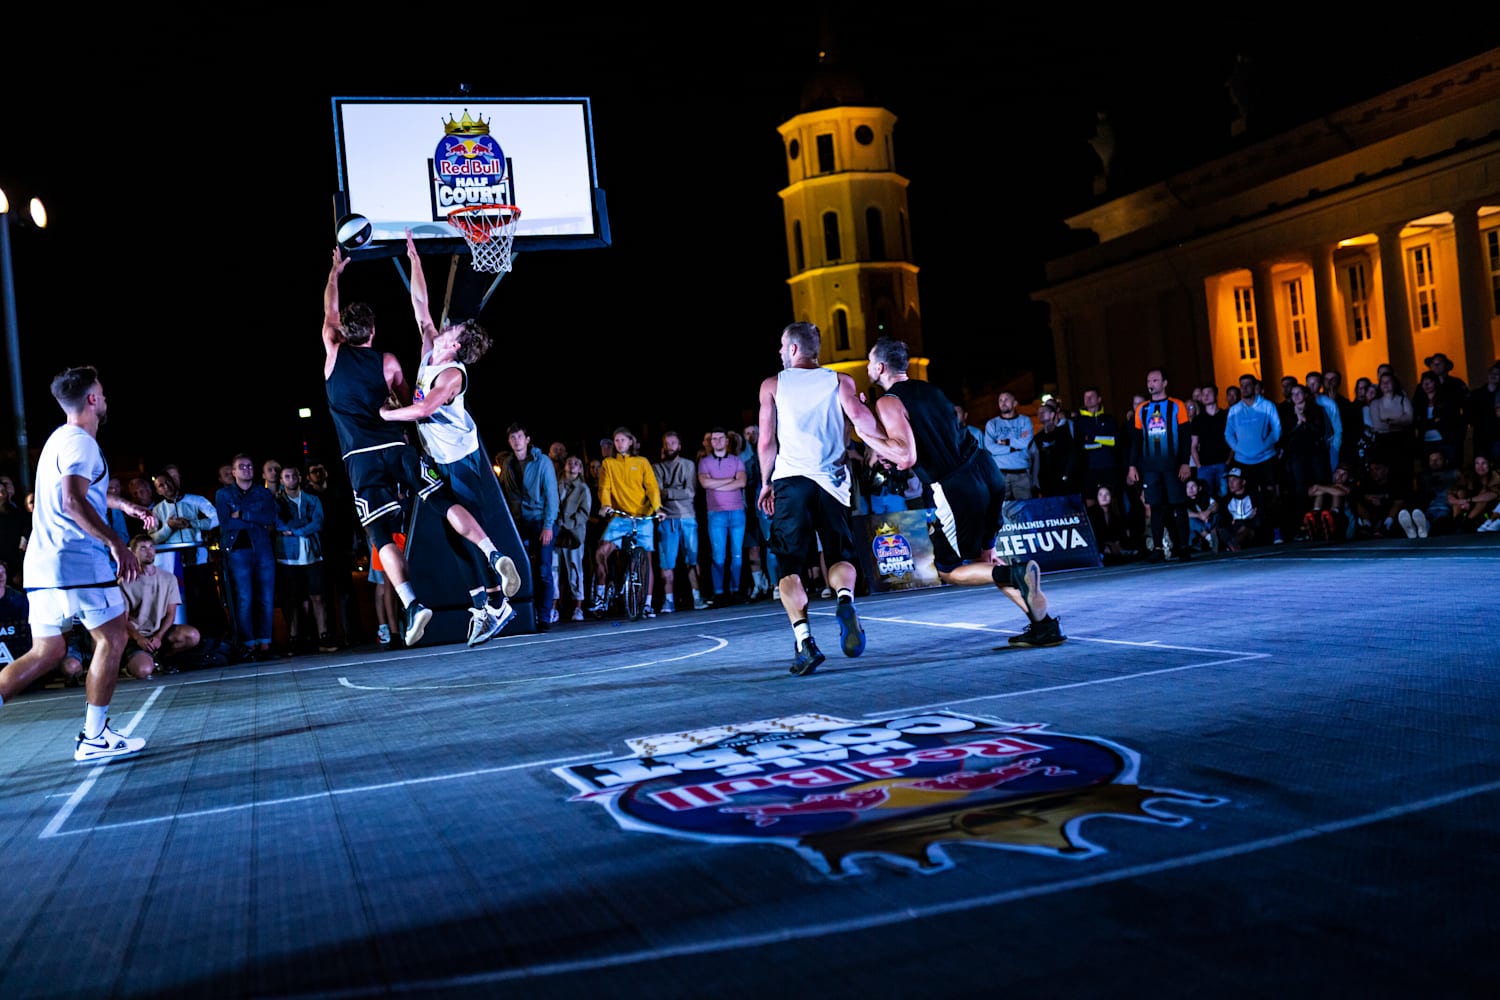 Red Bull Half Court 3x3 basketball tournament returns